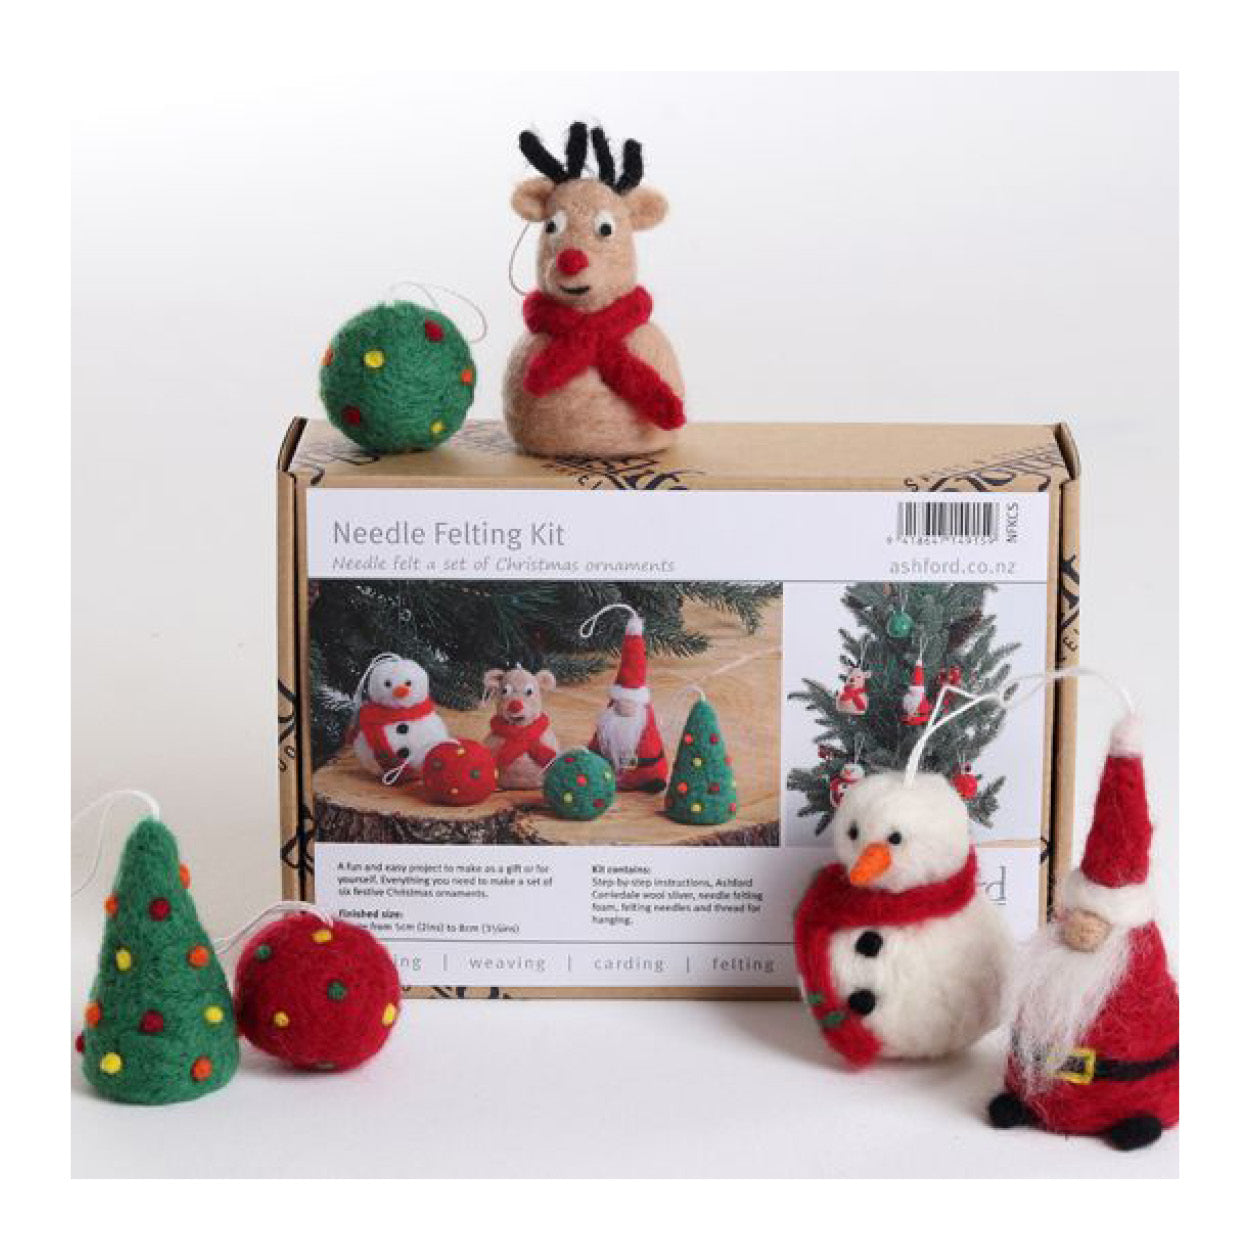 A photoshoot of Ashford Needle Felting Kit - Christmas Ornaments on a white background